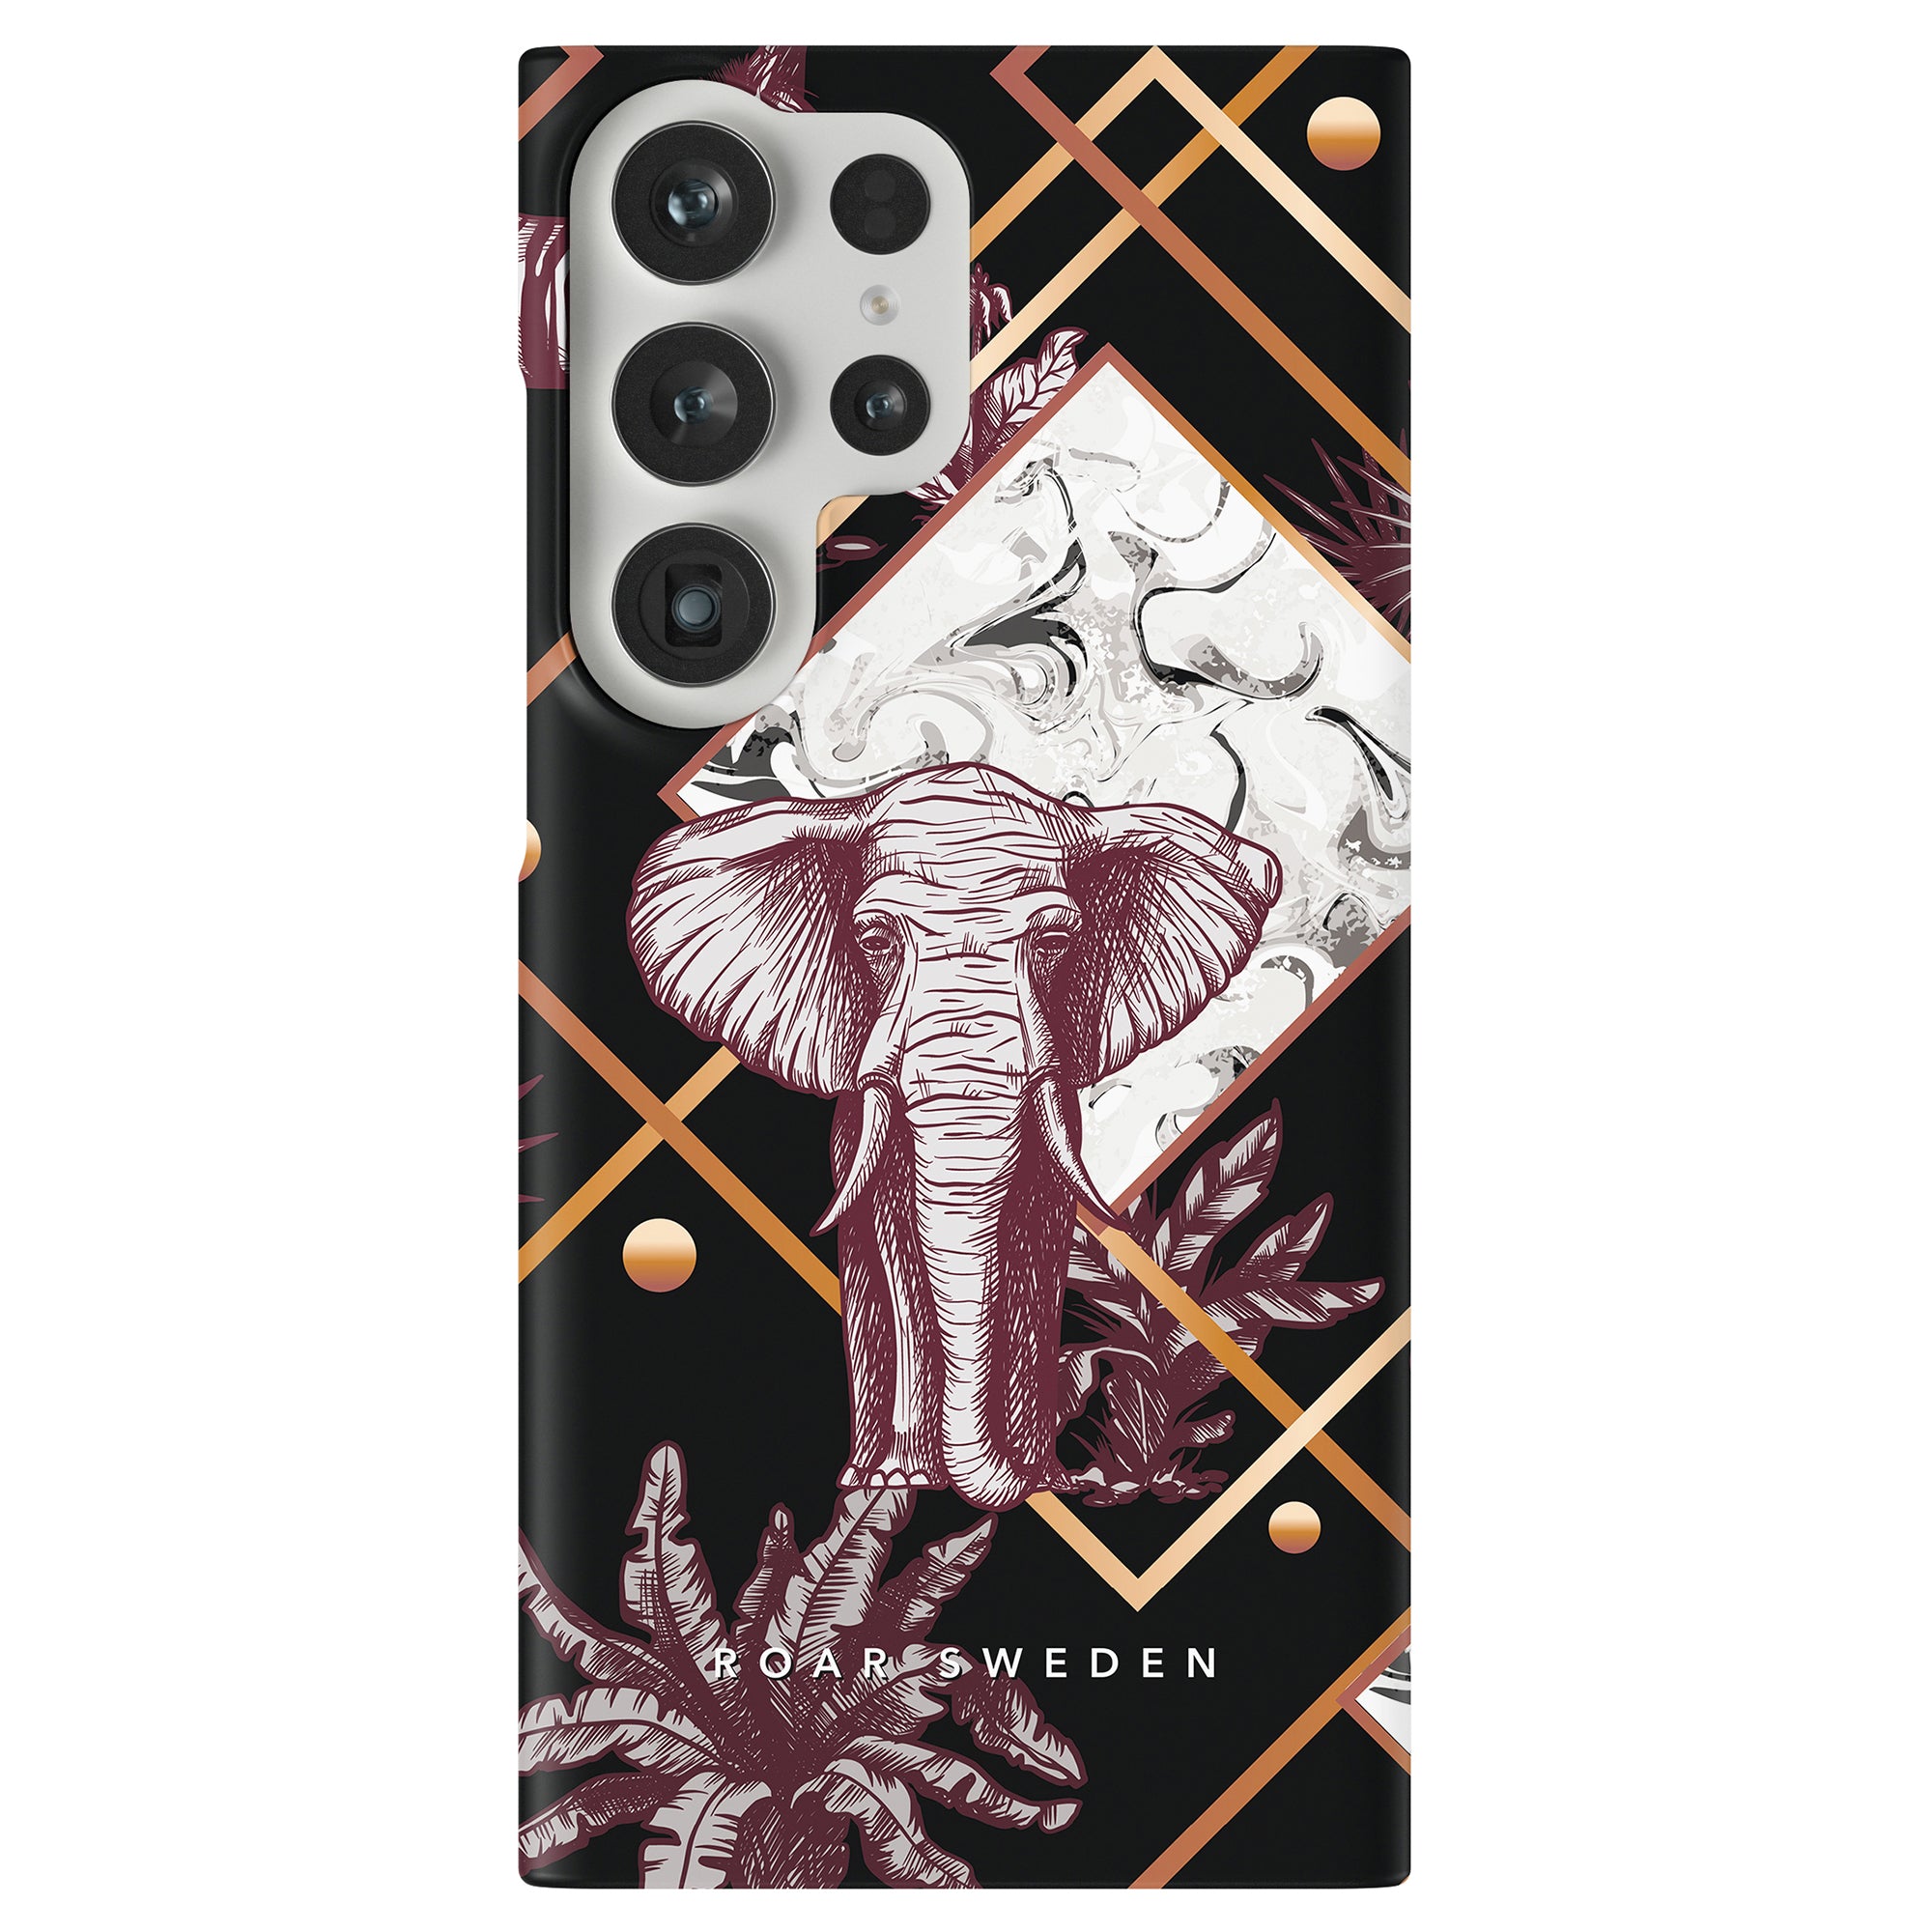 A Savanna - Slim case featuring an elephant illustration.